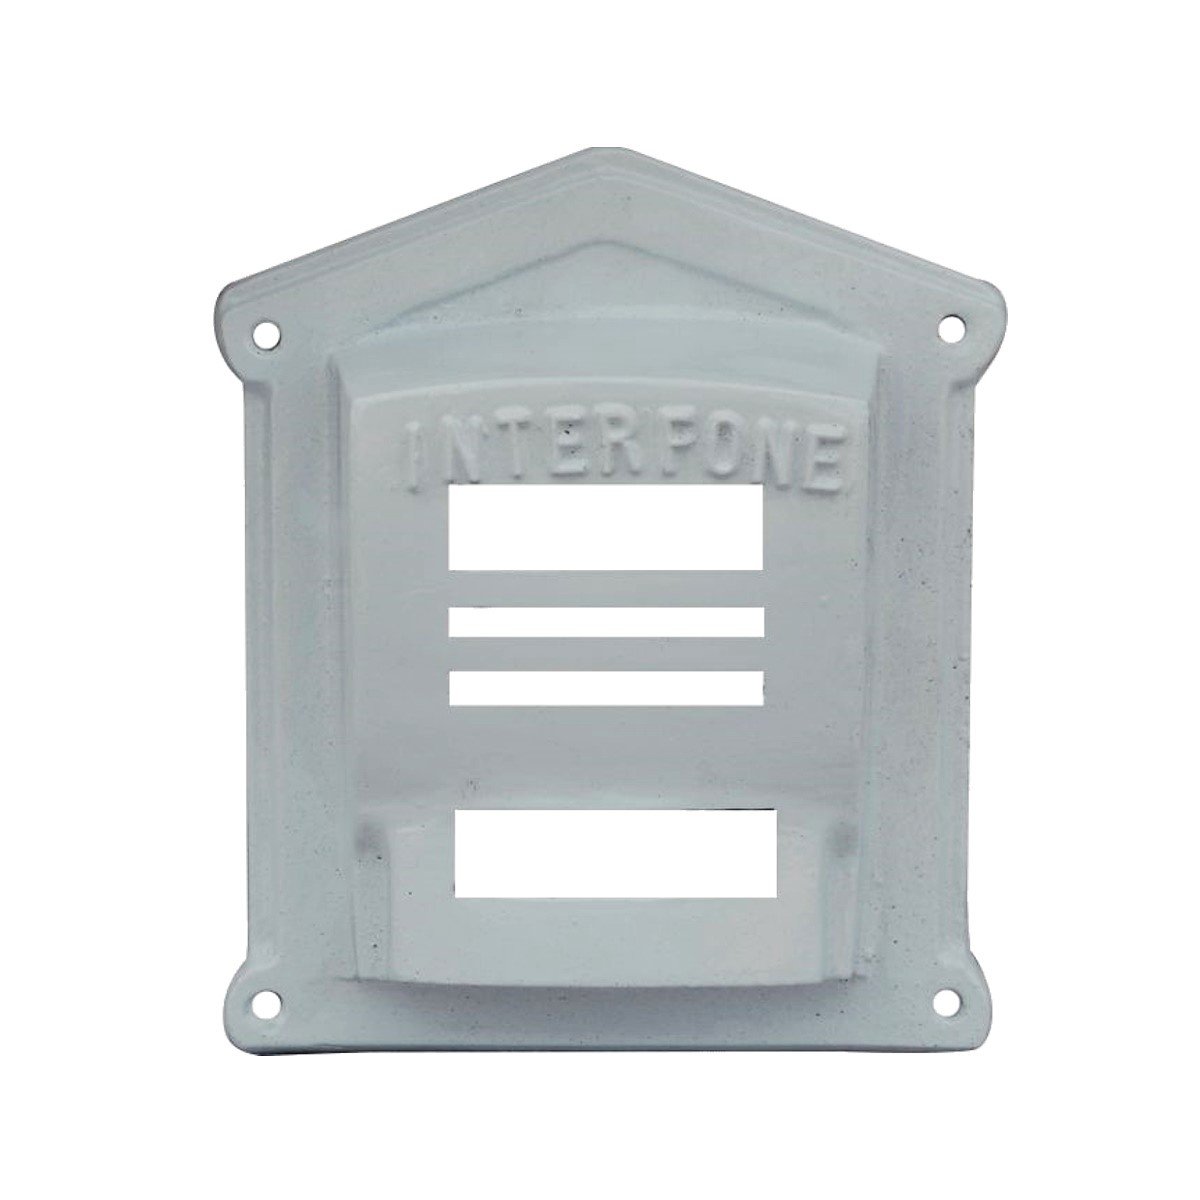 Protetor Interfone Caixa em Alumínio Fundido N02 Branco